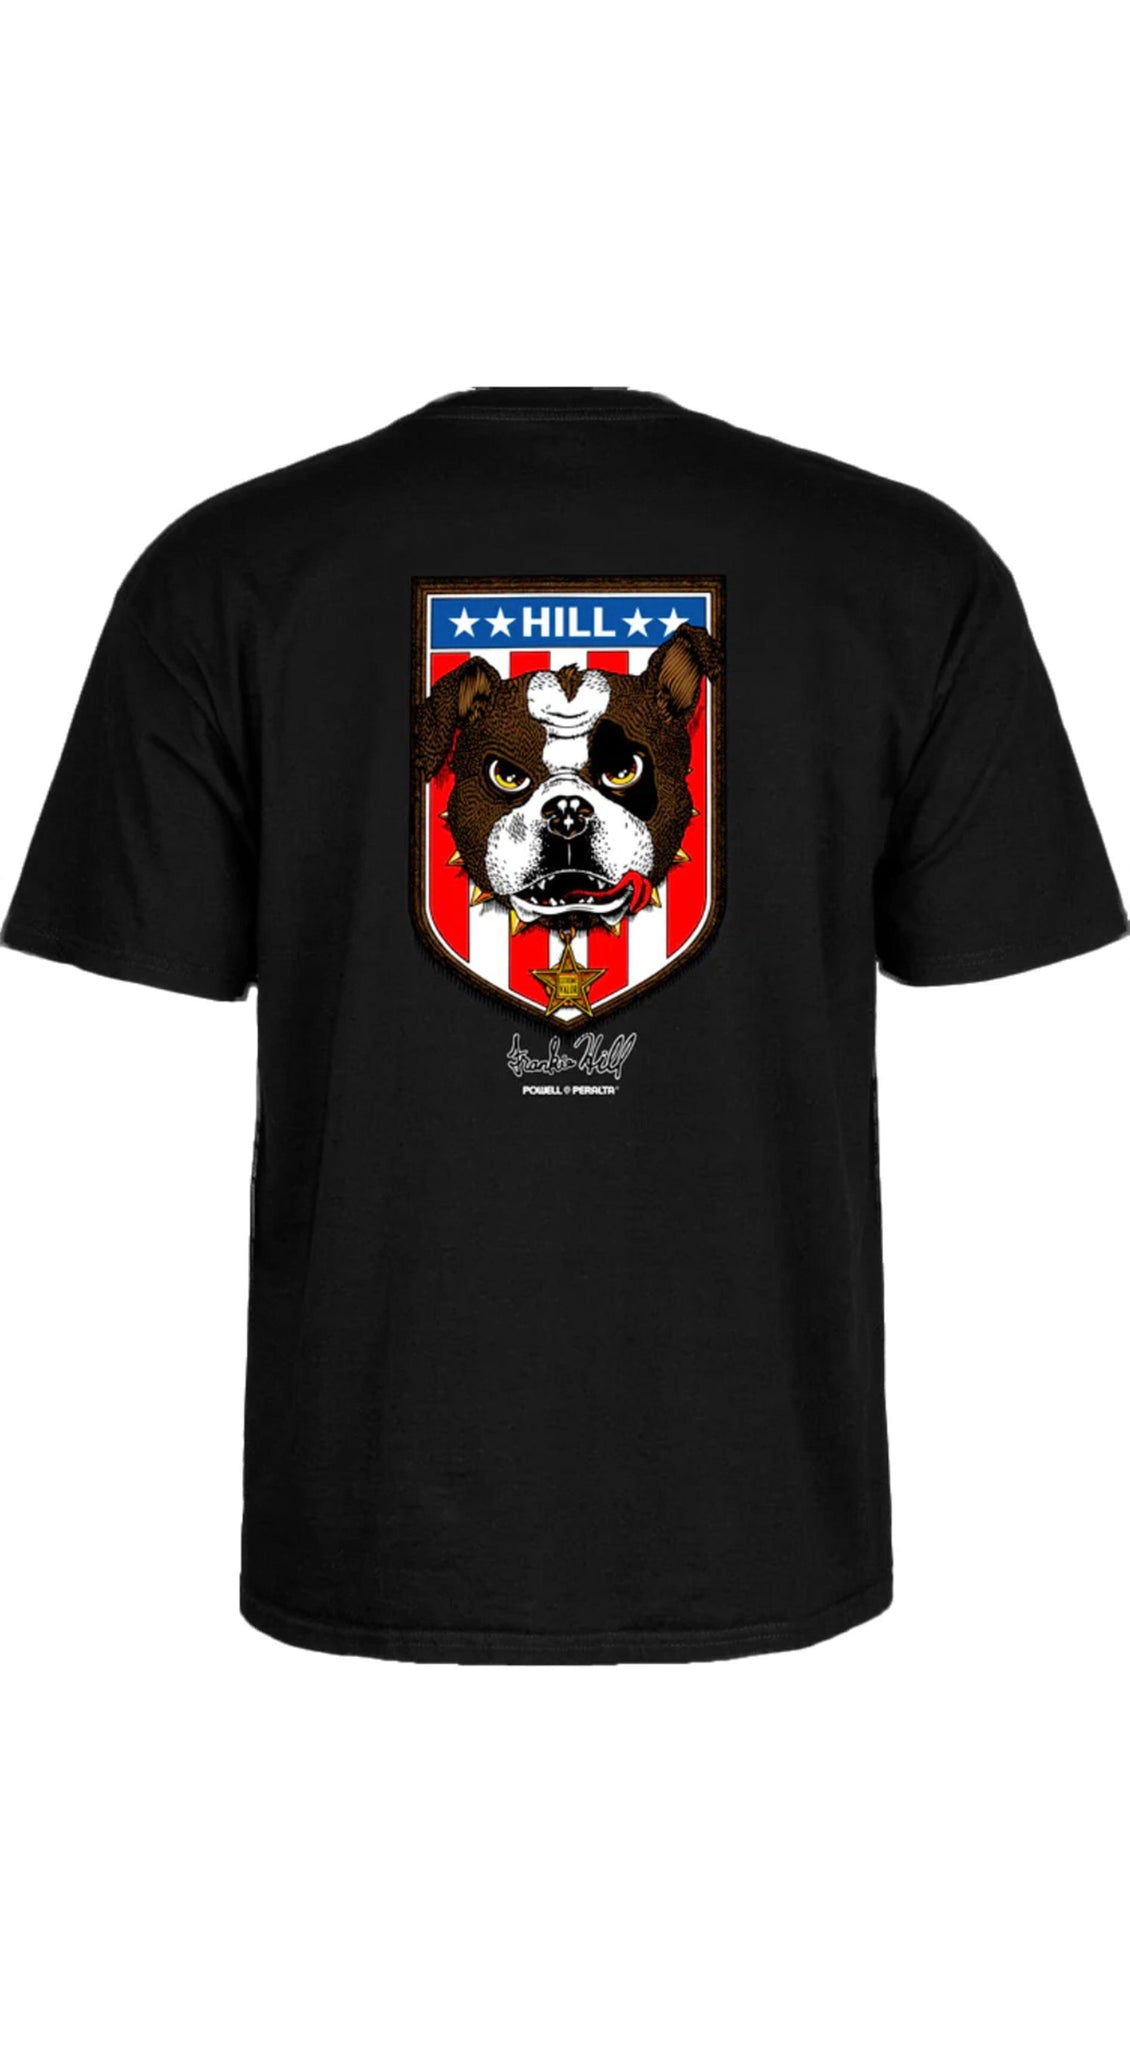 POWELL PERALTA Hill Bulldog T-Shirt Black- Camiseta Ropa Powell Peralta 